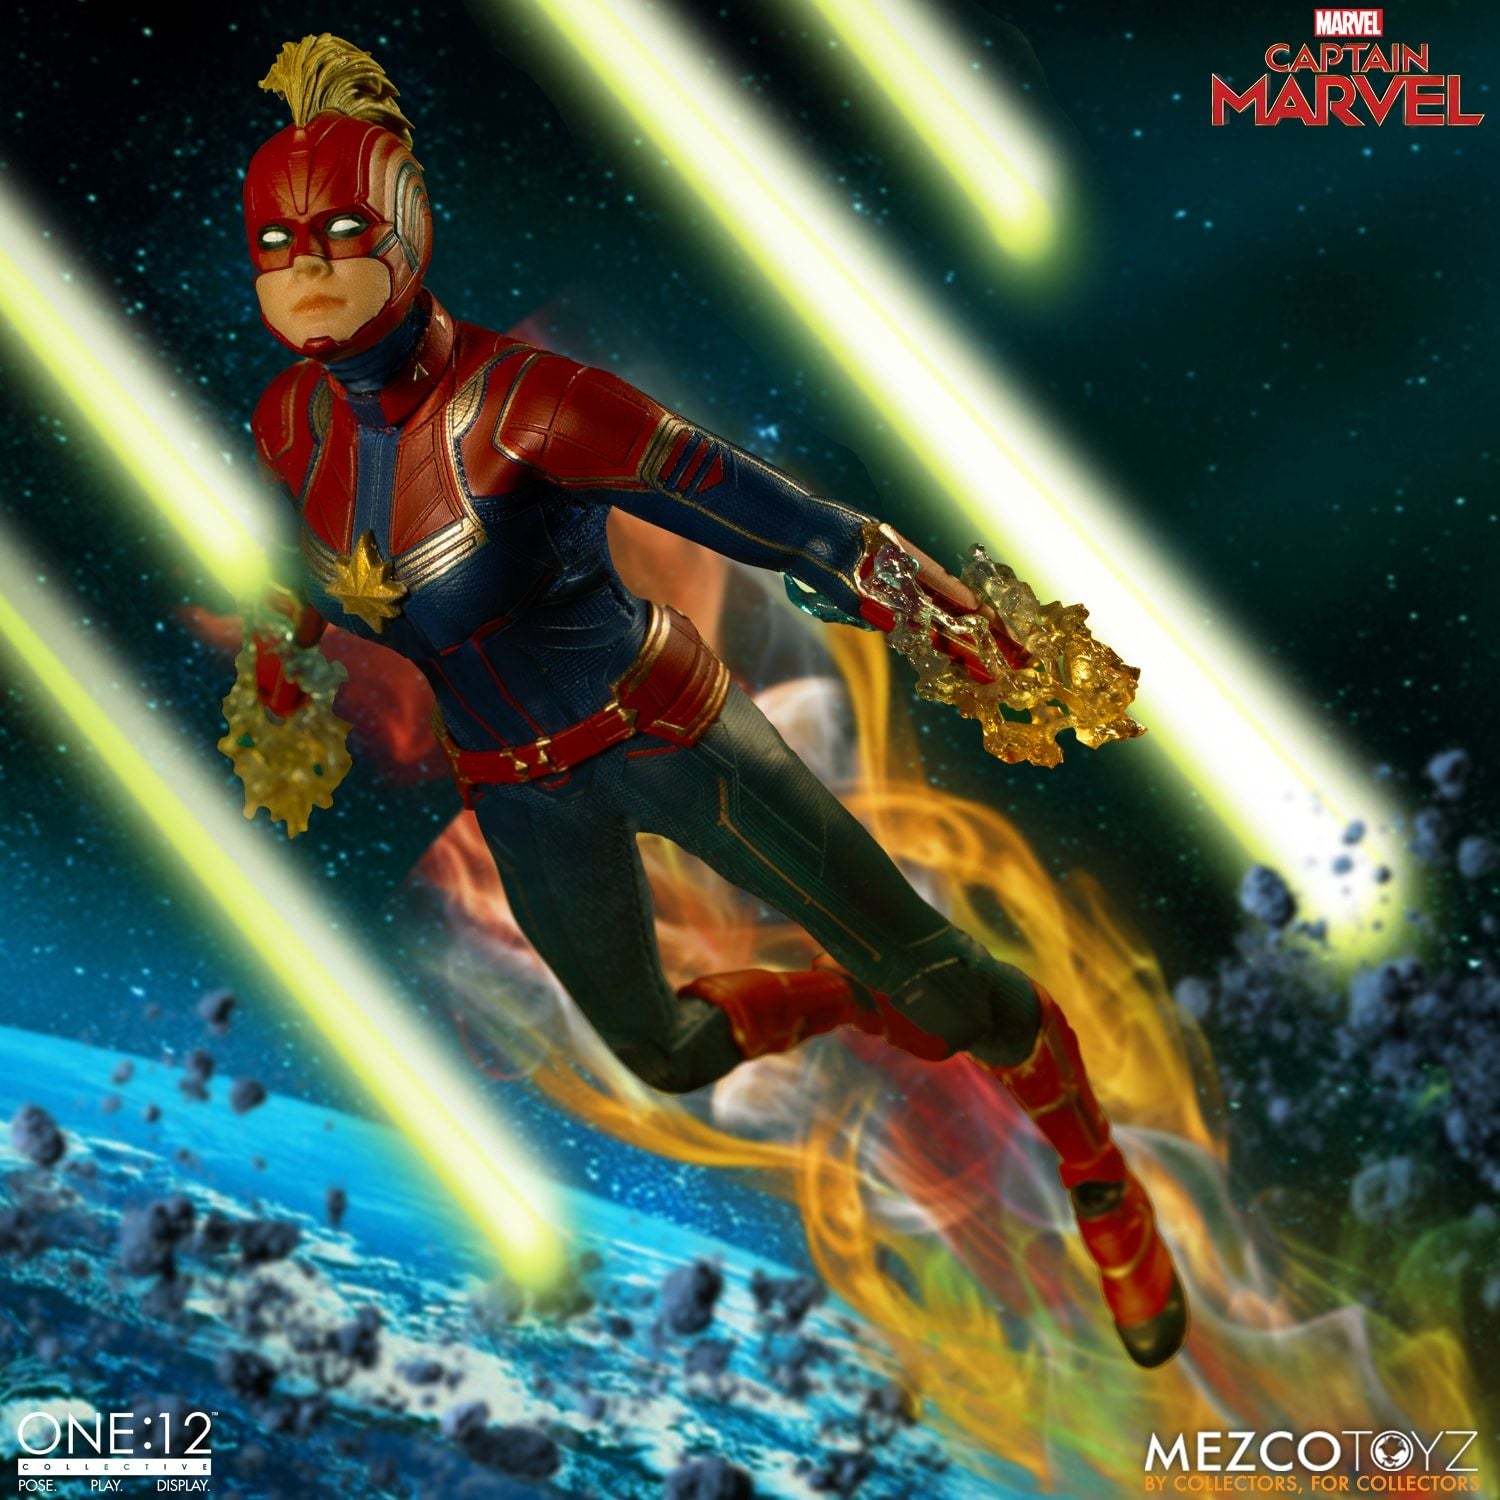 Mezco Toys One:12 Collective: Captain Marvel (2019) Action Figure 6